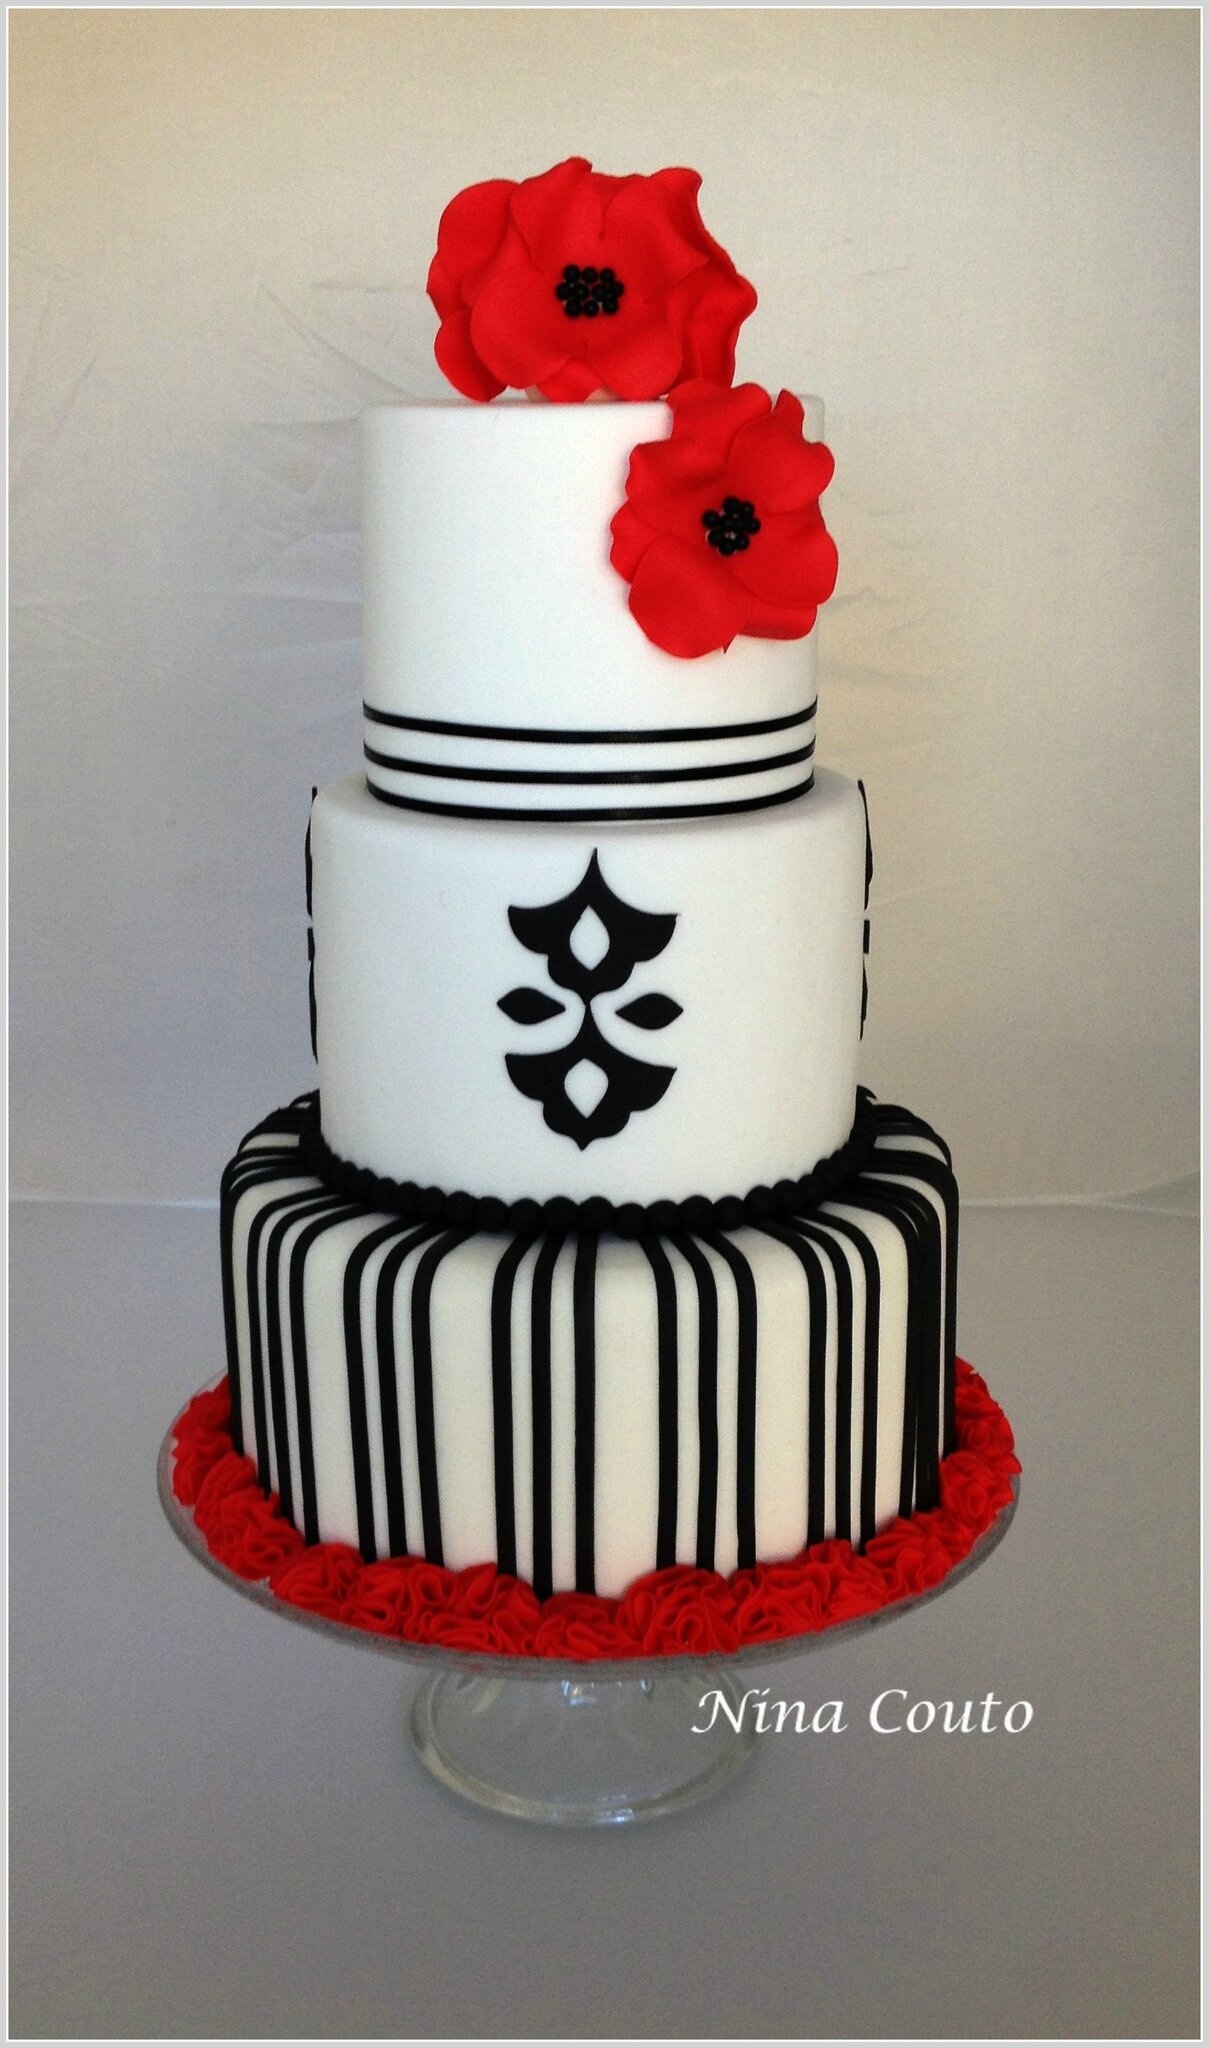 Wedding cake nina couto noir et rouge